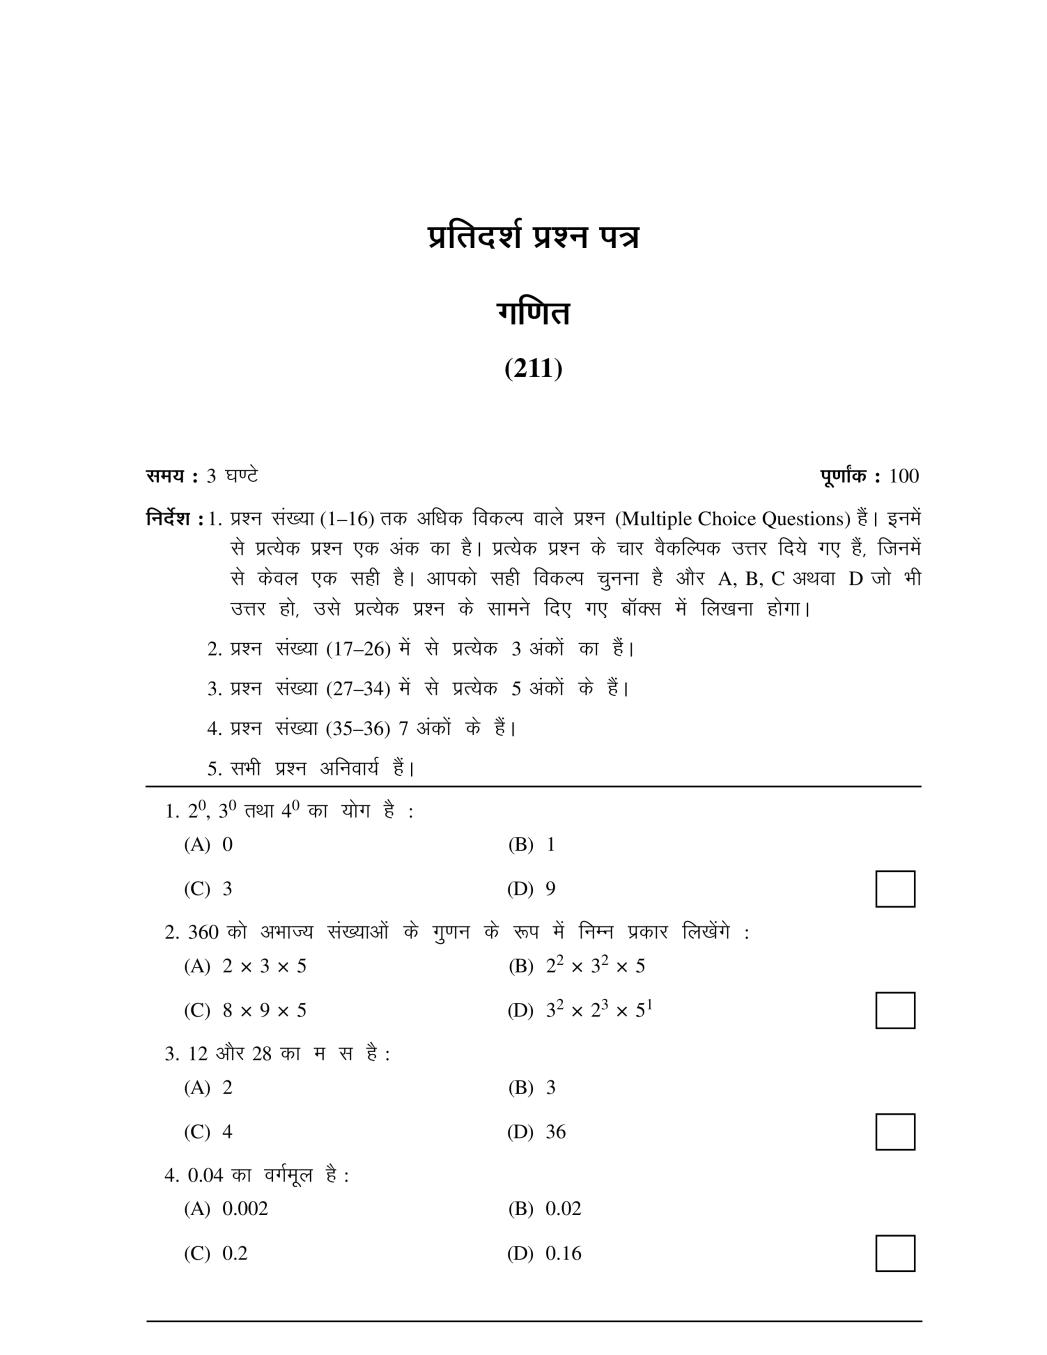 NIOS Class 10 Sample Paper 2020 - Mathematics (Hindi Medium) - Page 1